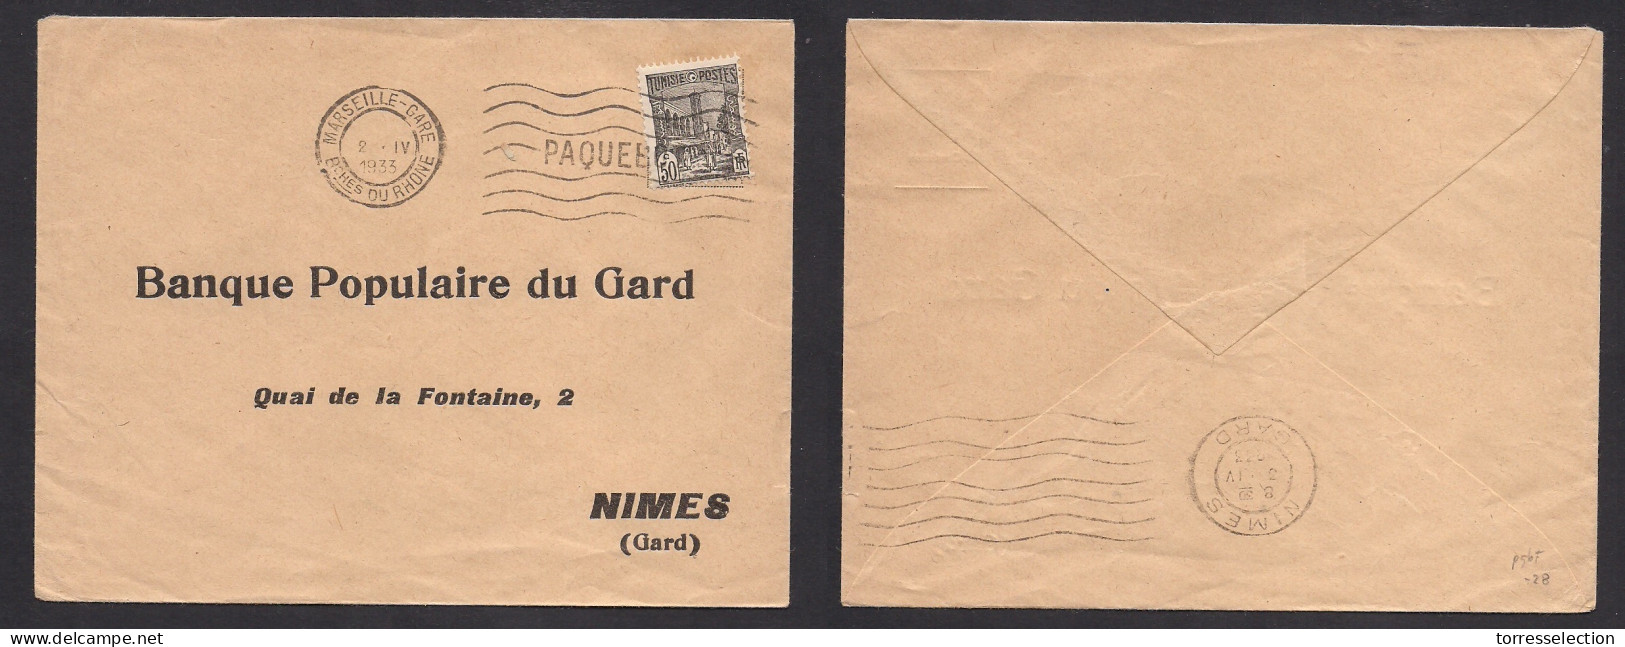 TUNISIA. 1933 (2 Apr) Pqbot Single 50c Fkd Env To France, Nimes (3 Apr) Via Marseille Rolling Pqbt Cachet. - Tunisia (1956-...)